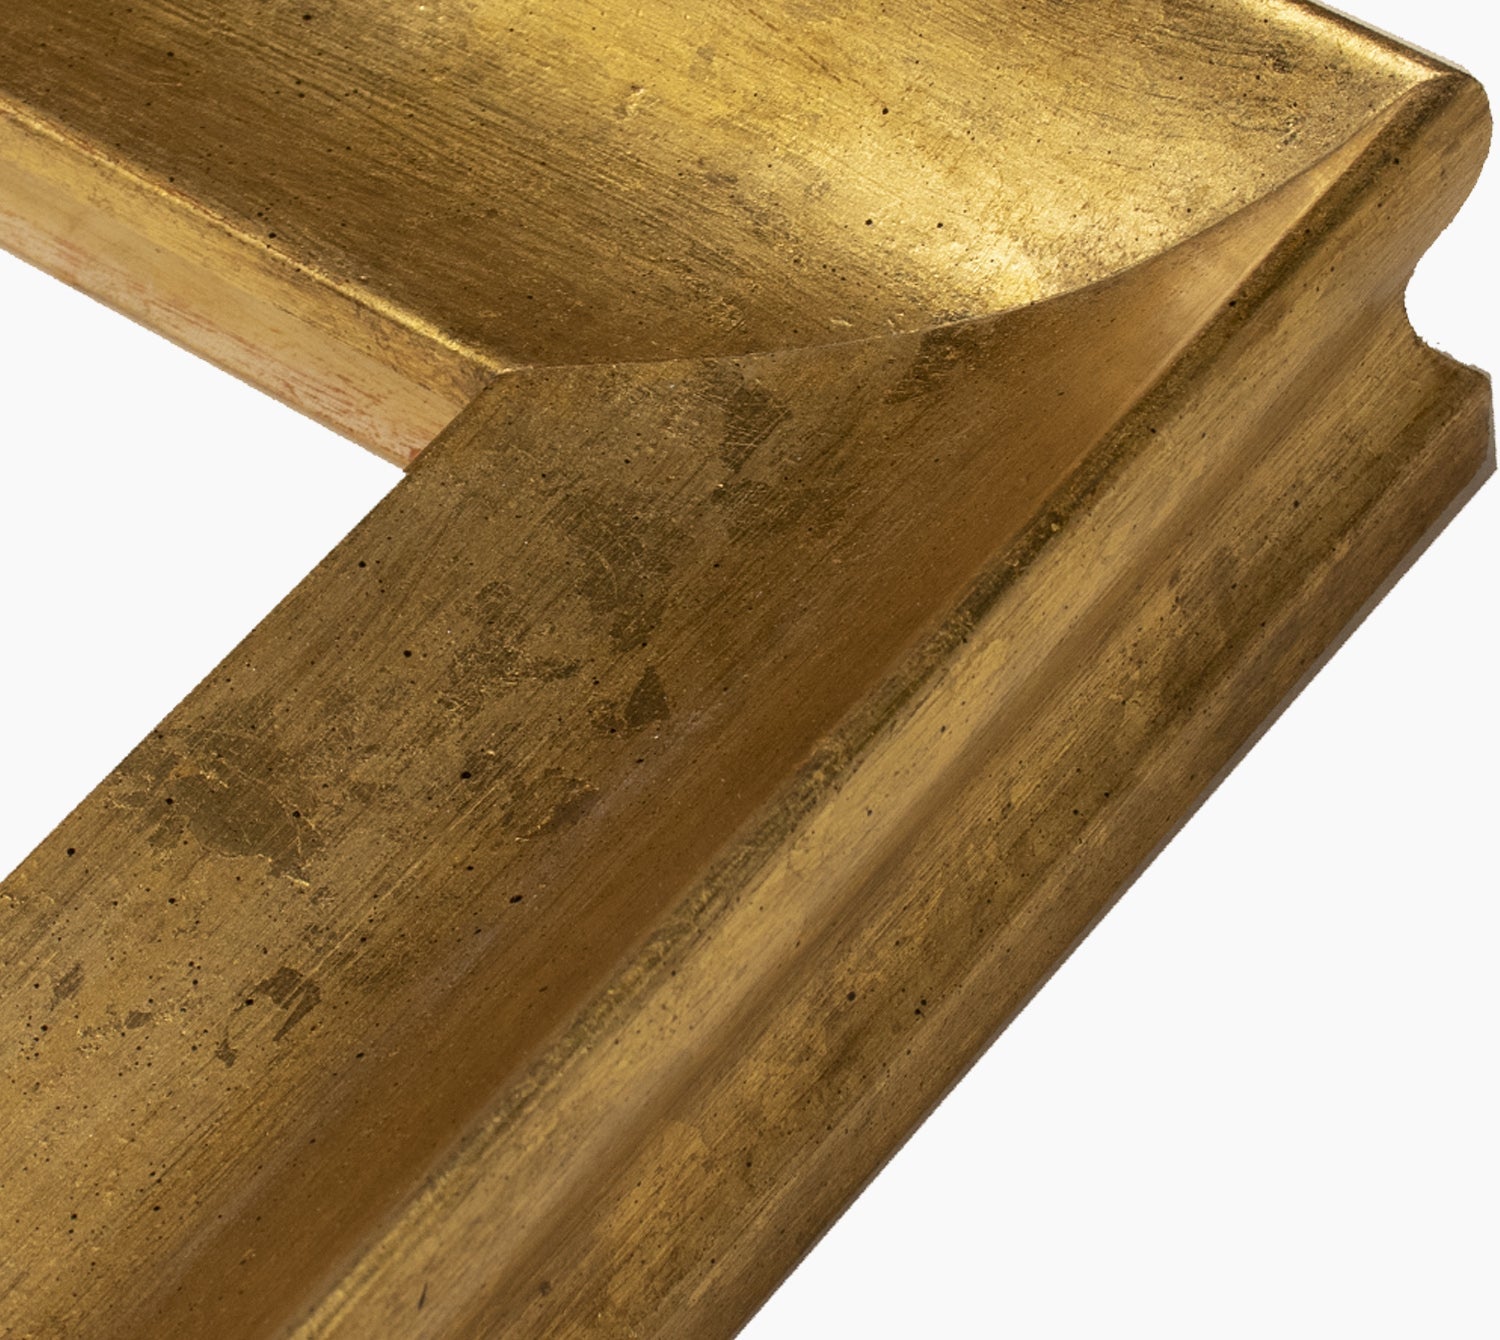 444.010 cadre en bois à la feuille d'or mesure de profil 65x55 mm Lombarda cornici S.n.c.